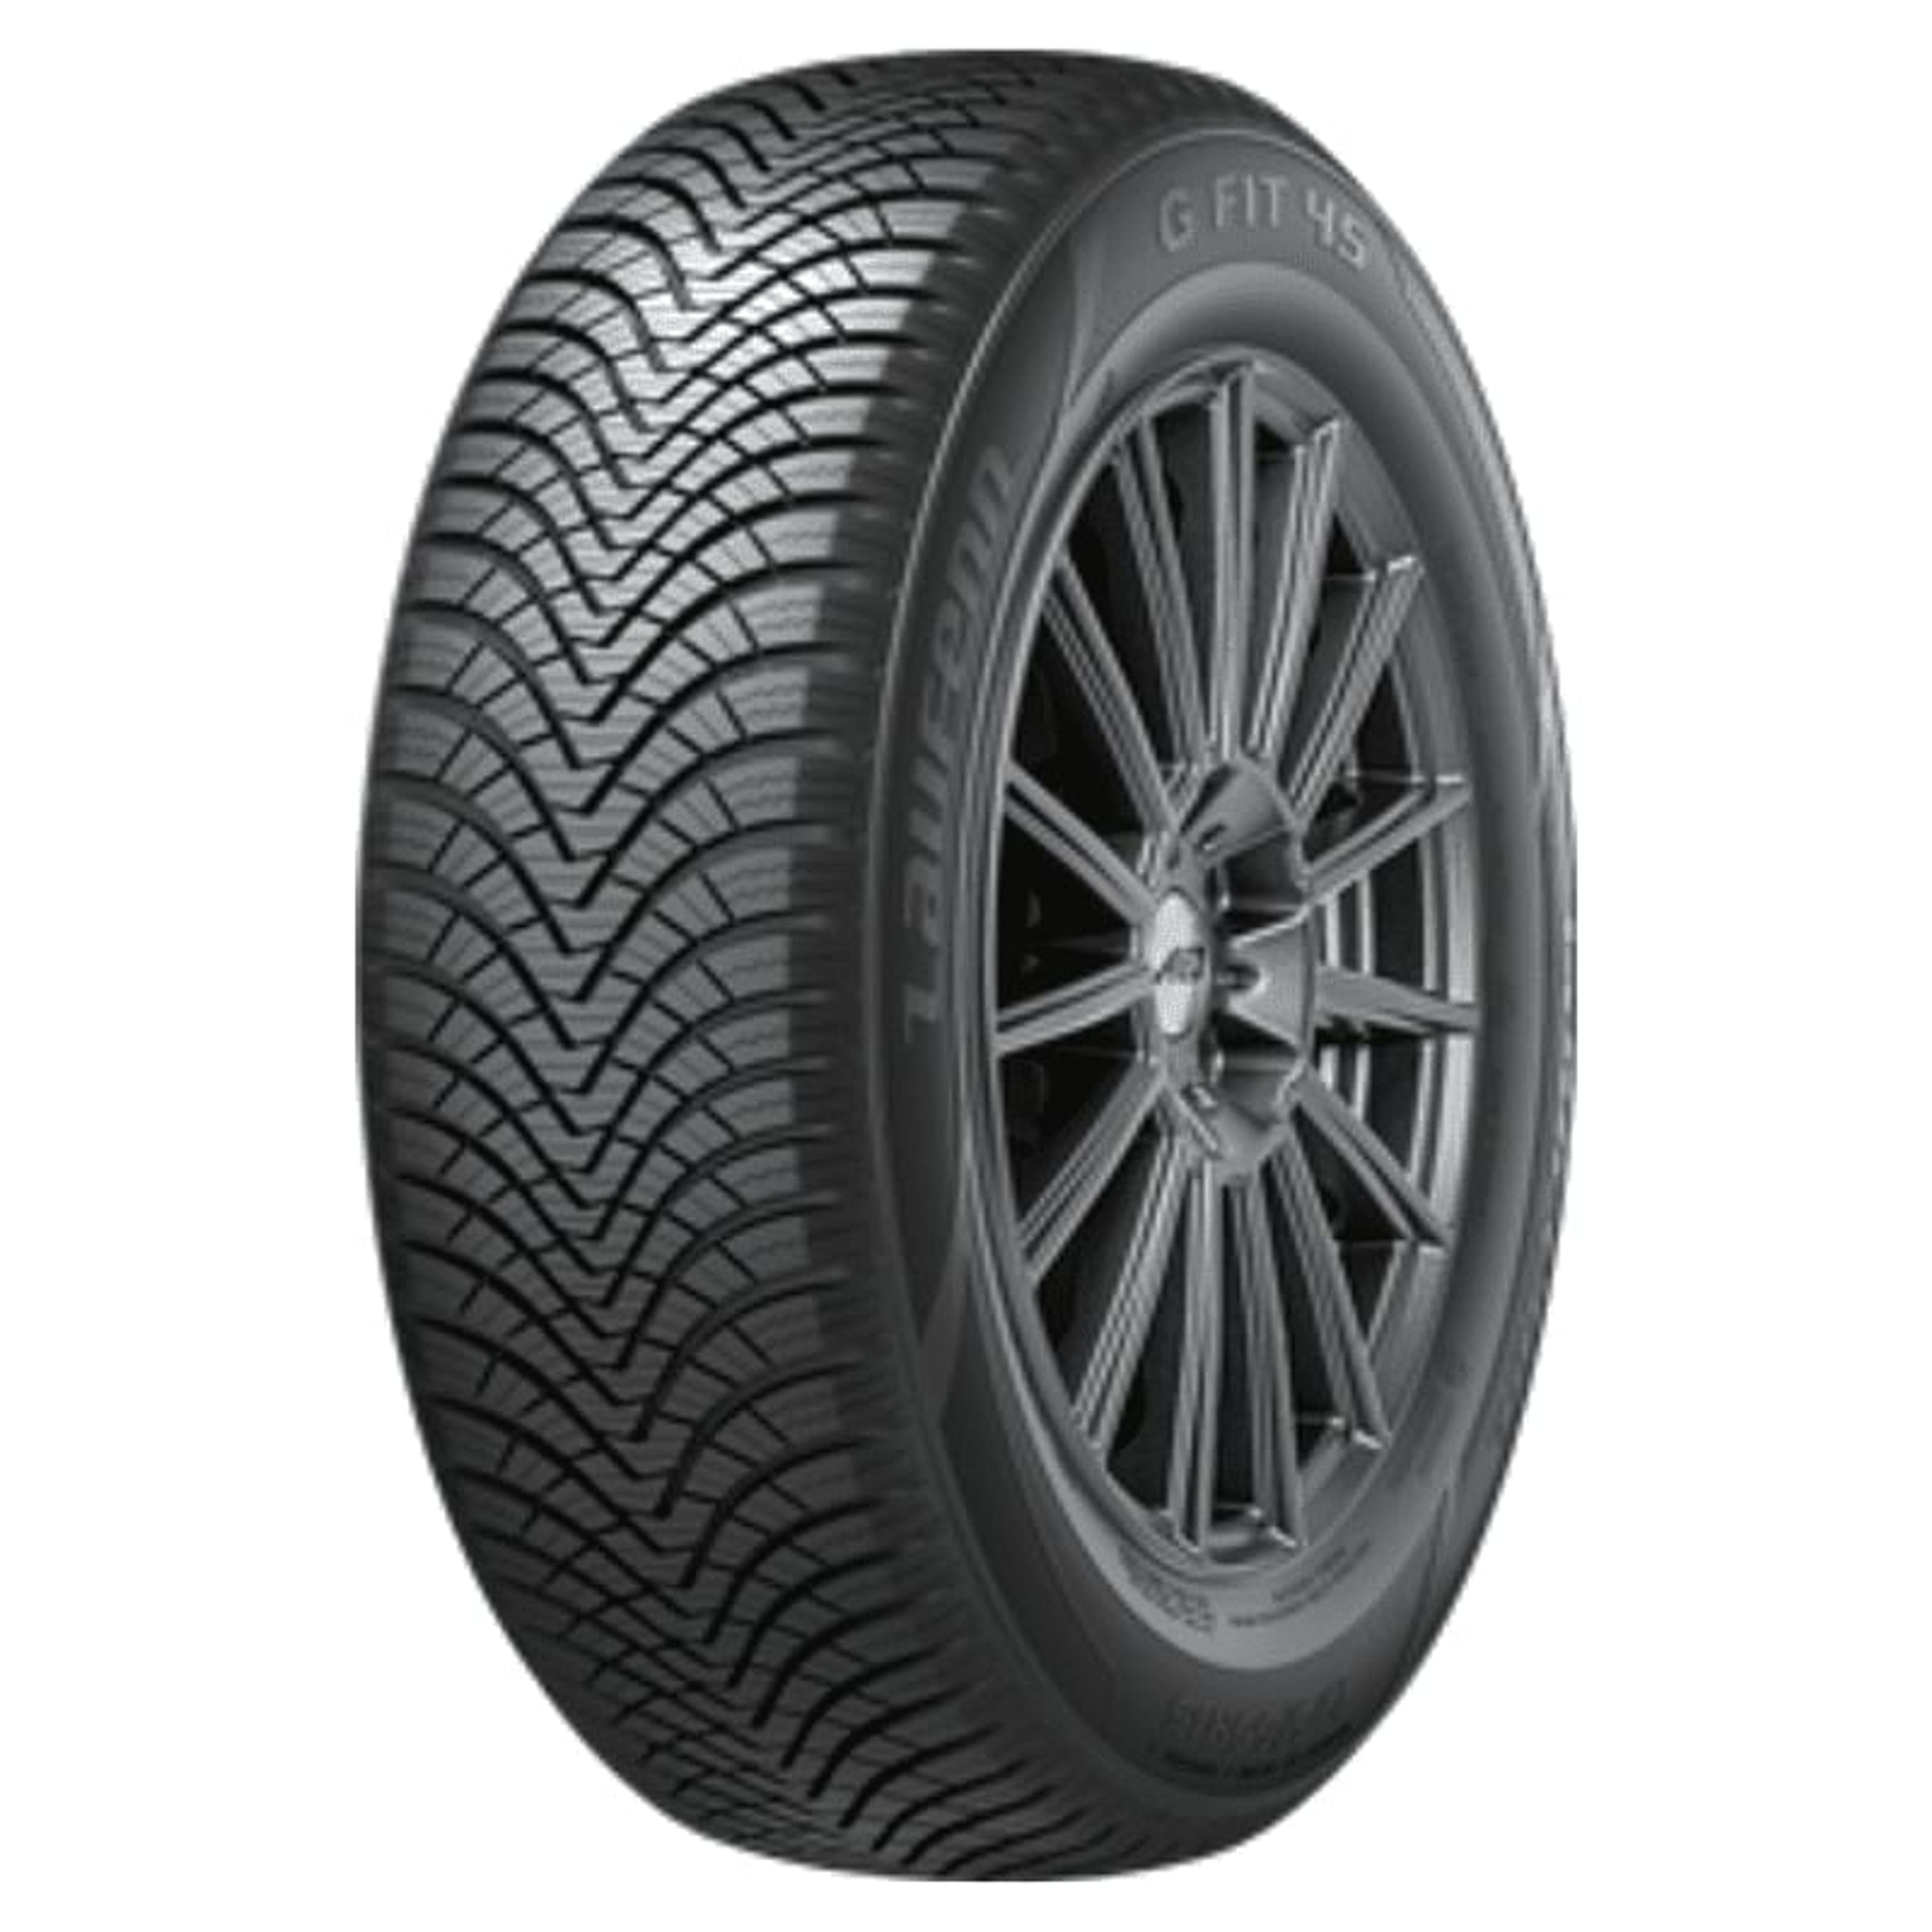 Buy Laufenn G SimpleTire Tires | FIT 4S Online